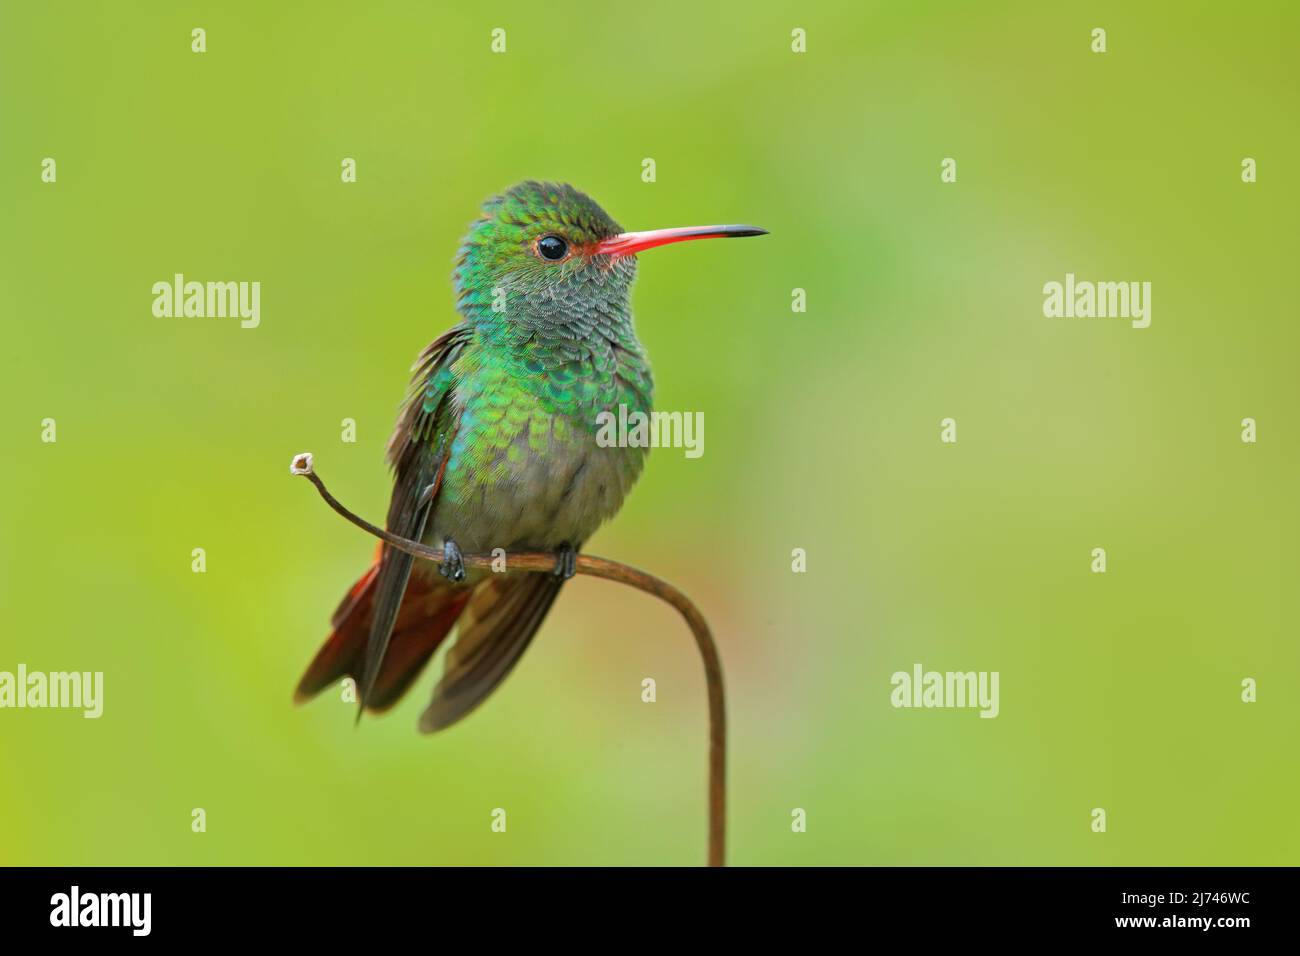 Hummingbird Rufous-tailed Hummingbird, Amazilia tzacat, with clear green background, Colombia Stock Photo